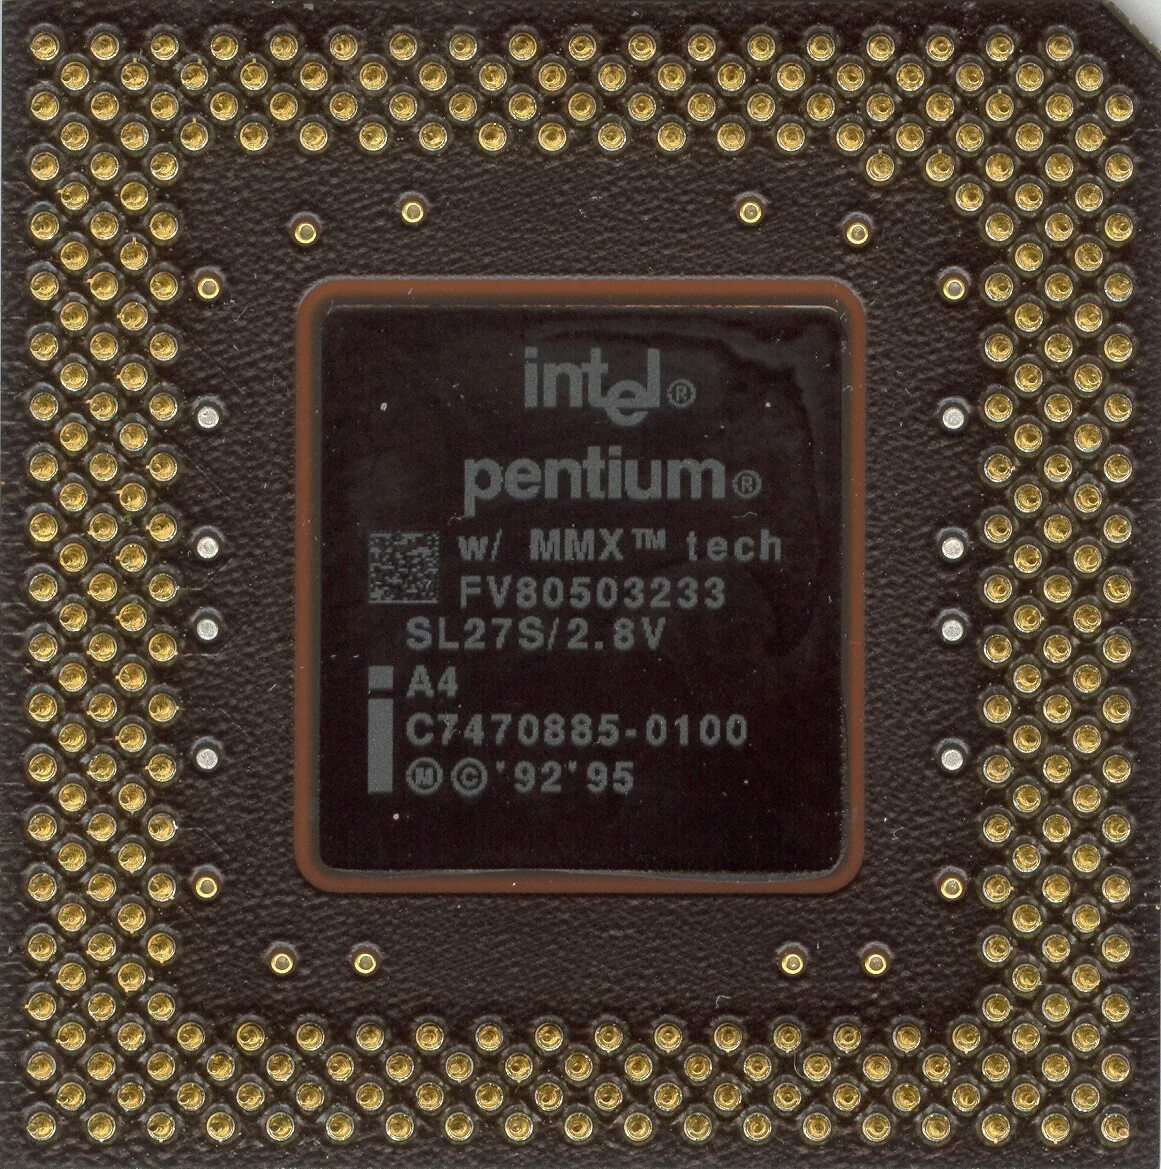 Интел коре пентиум. Intel Pentium 166 MMX. Процессор Intel Pentium MMX 166mhz. Pentium 233 MMX. Процессор Интел пентиум 1.